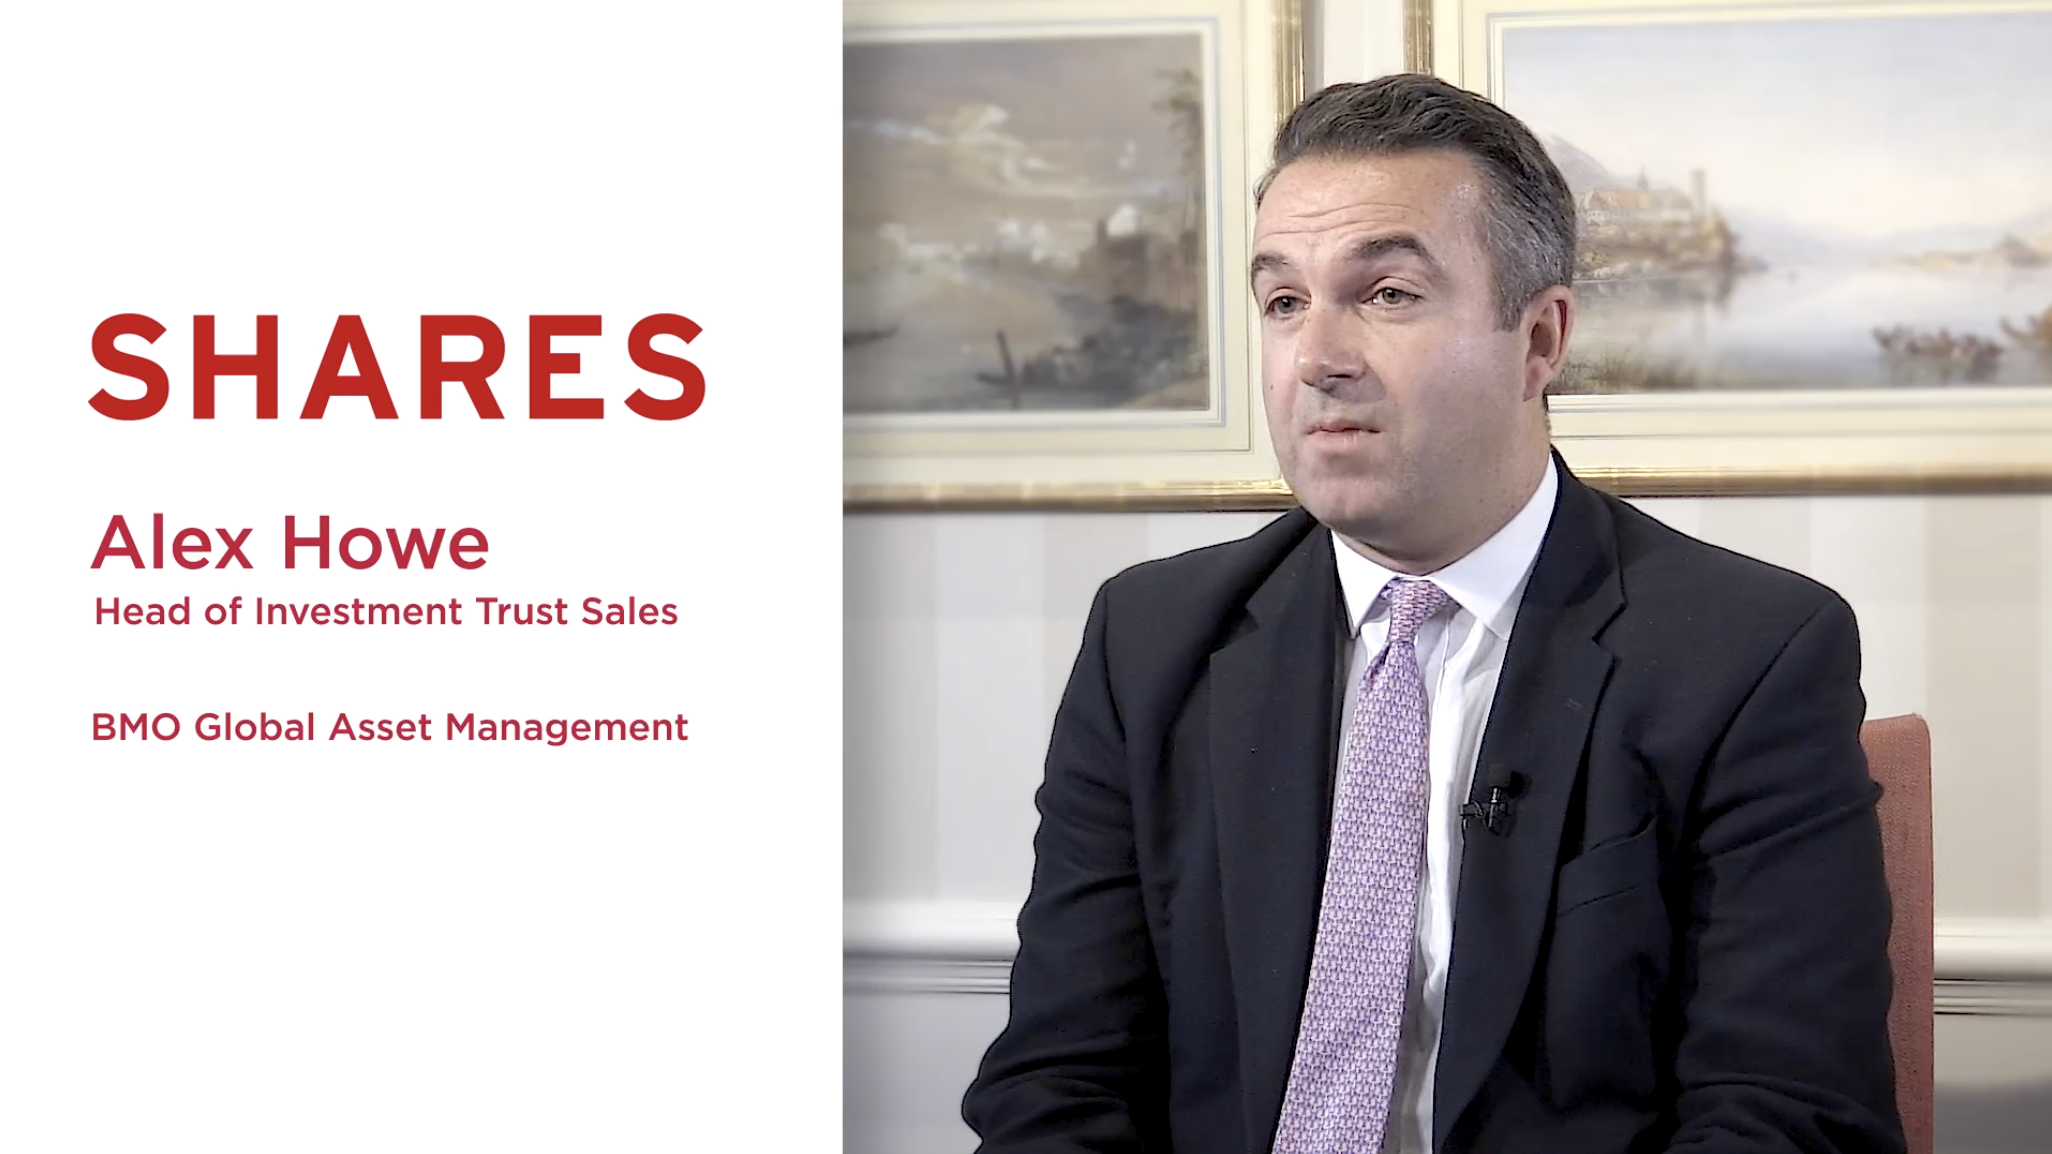 BMO Global Asset Management - Alex Howe, Head of Investment Trust Sales